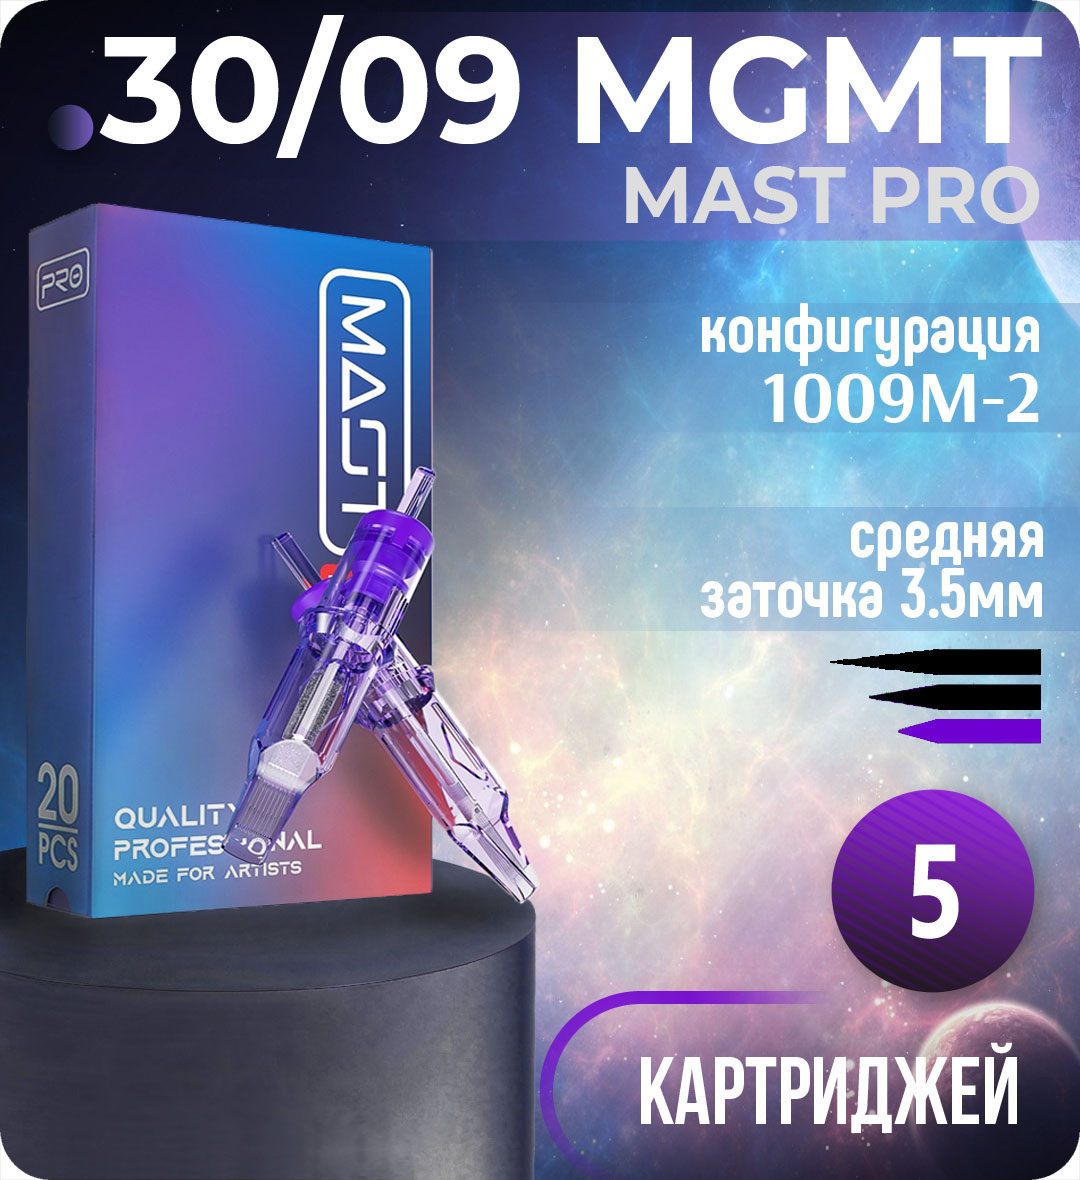 Картриджи Mast Pro 30/09 MGMT (1009M-2) для тату, перманентного макияжа и татуажа Dragonhawk 5шт